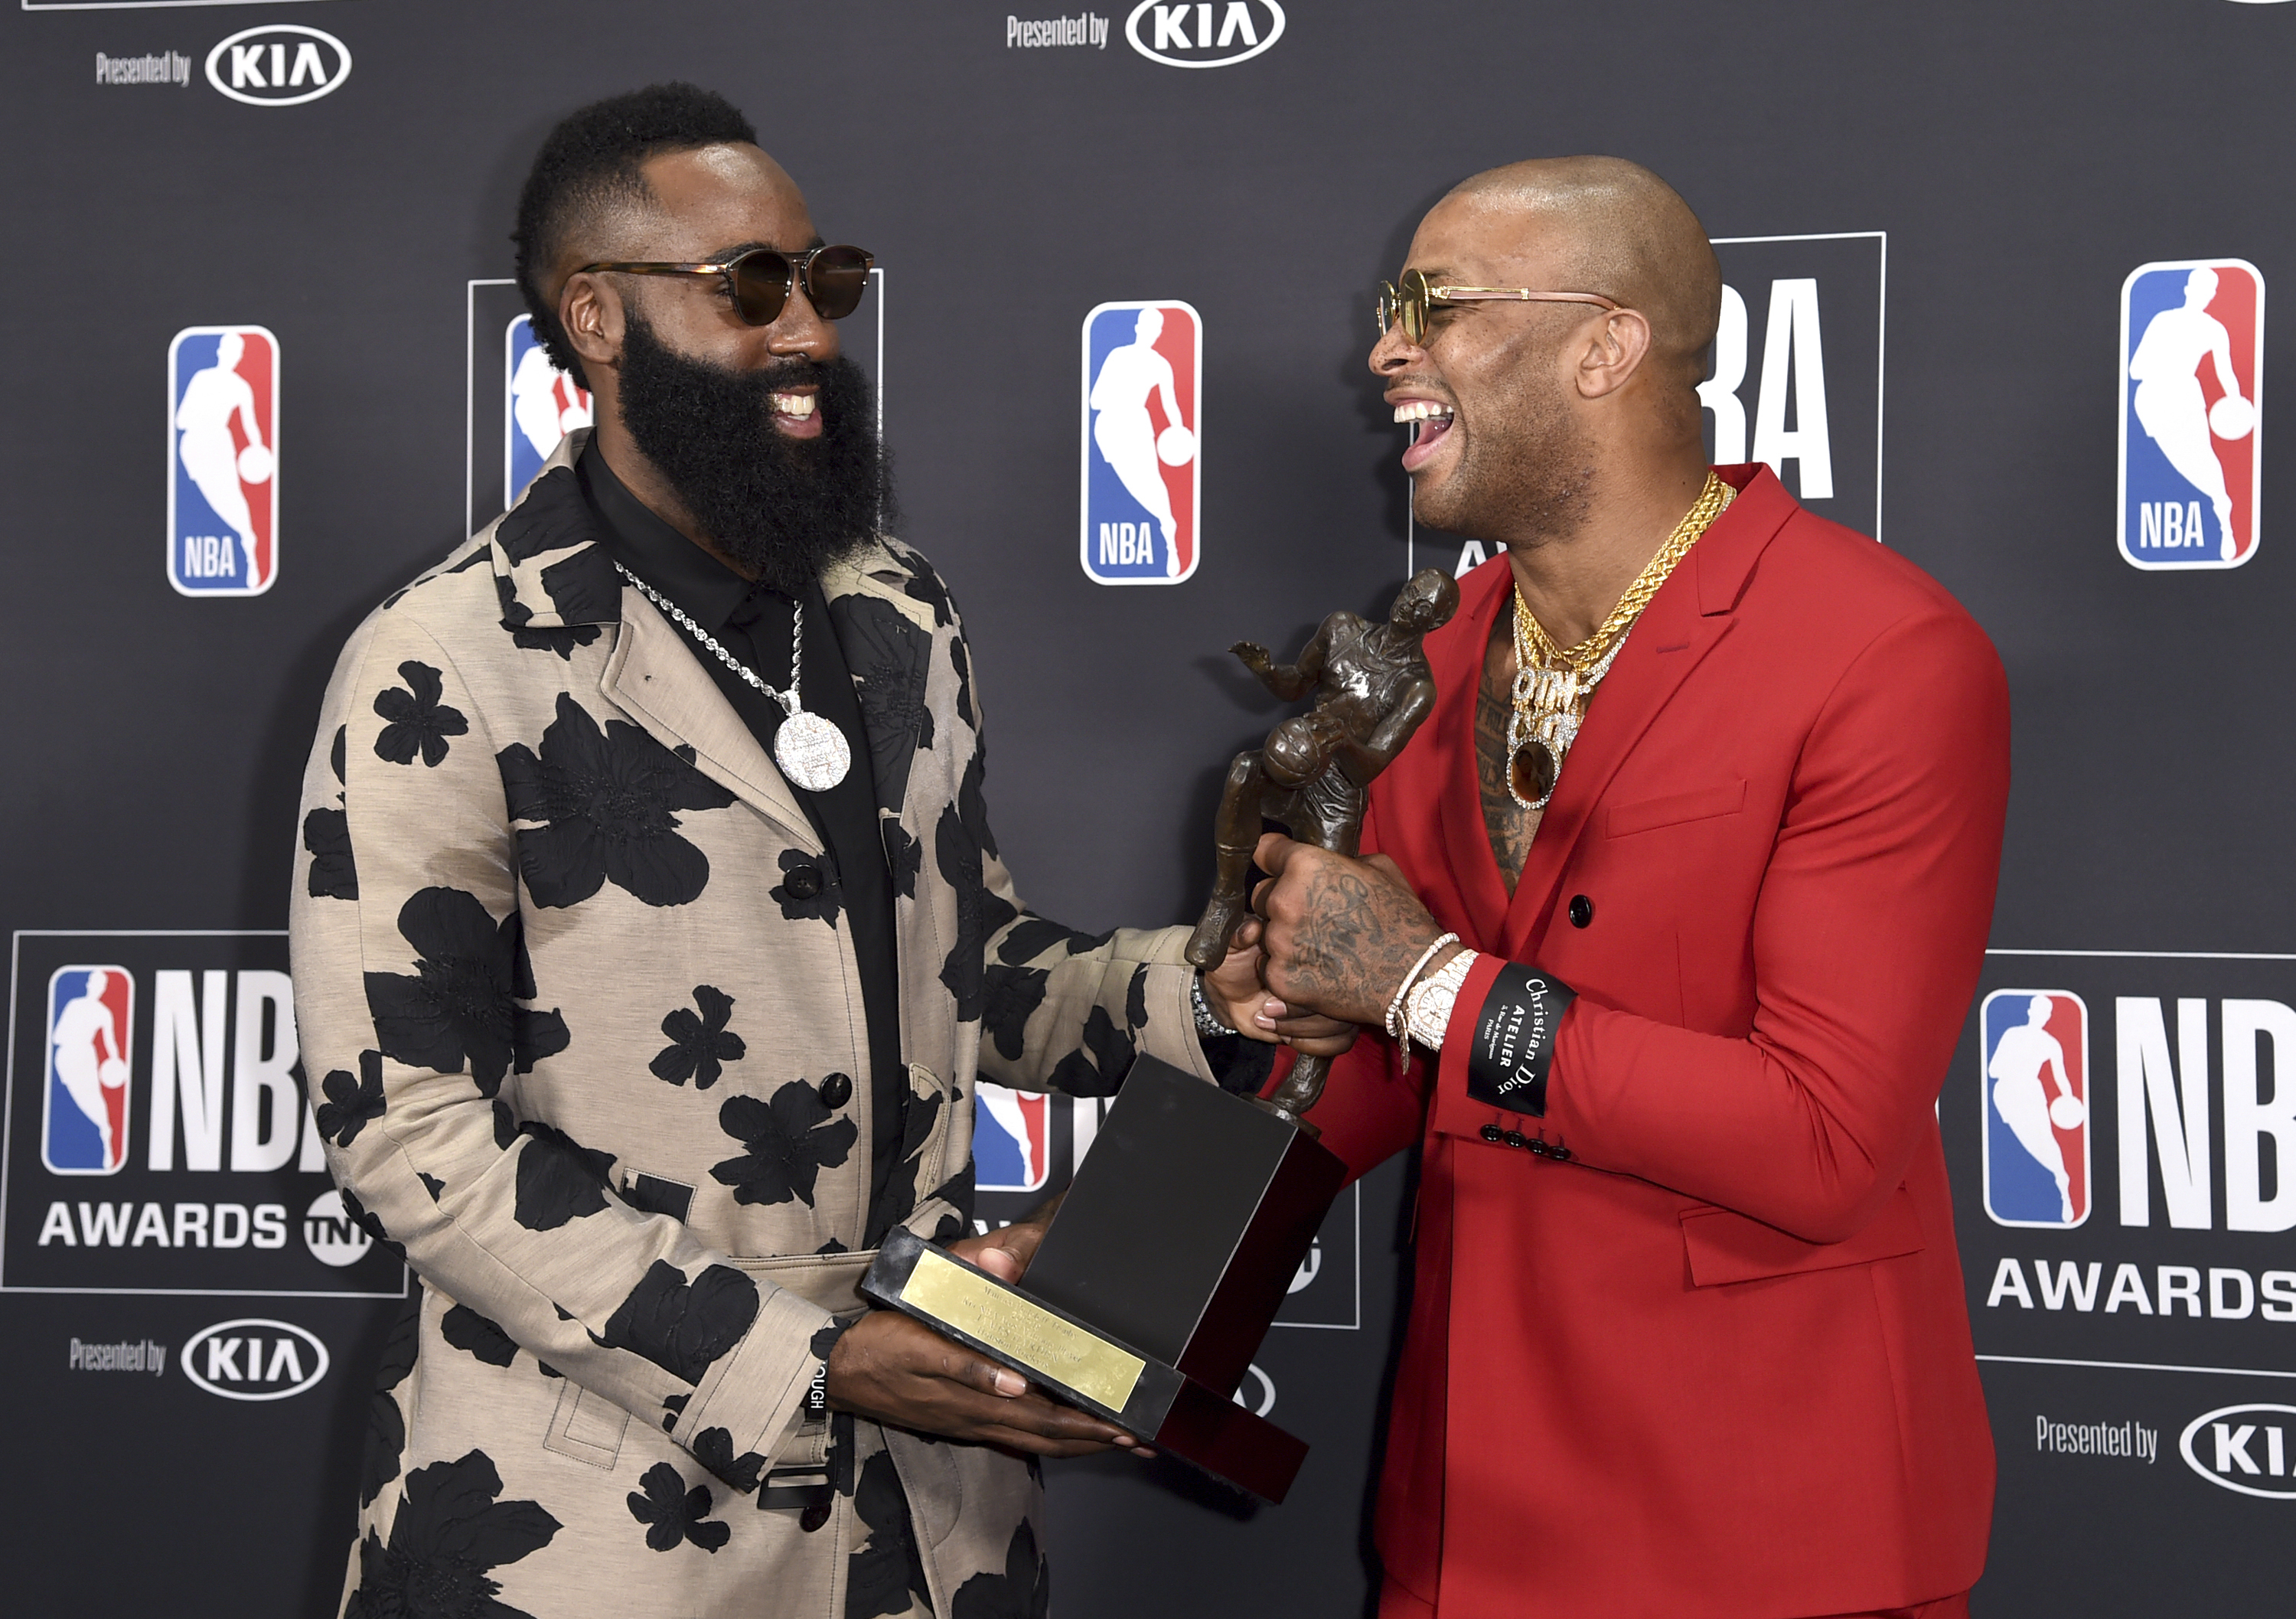 James Harden picks up MVP trophy in garish suit at 2018 NBA Awards